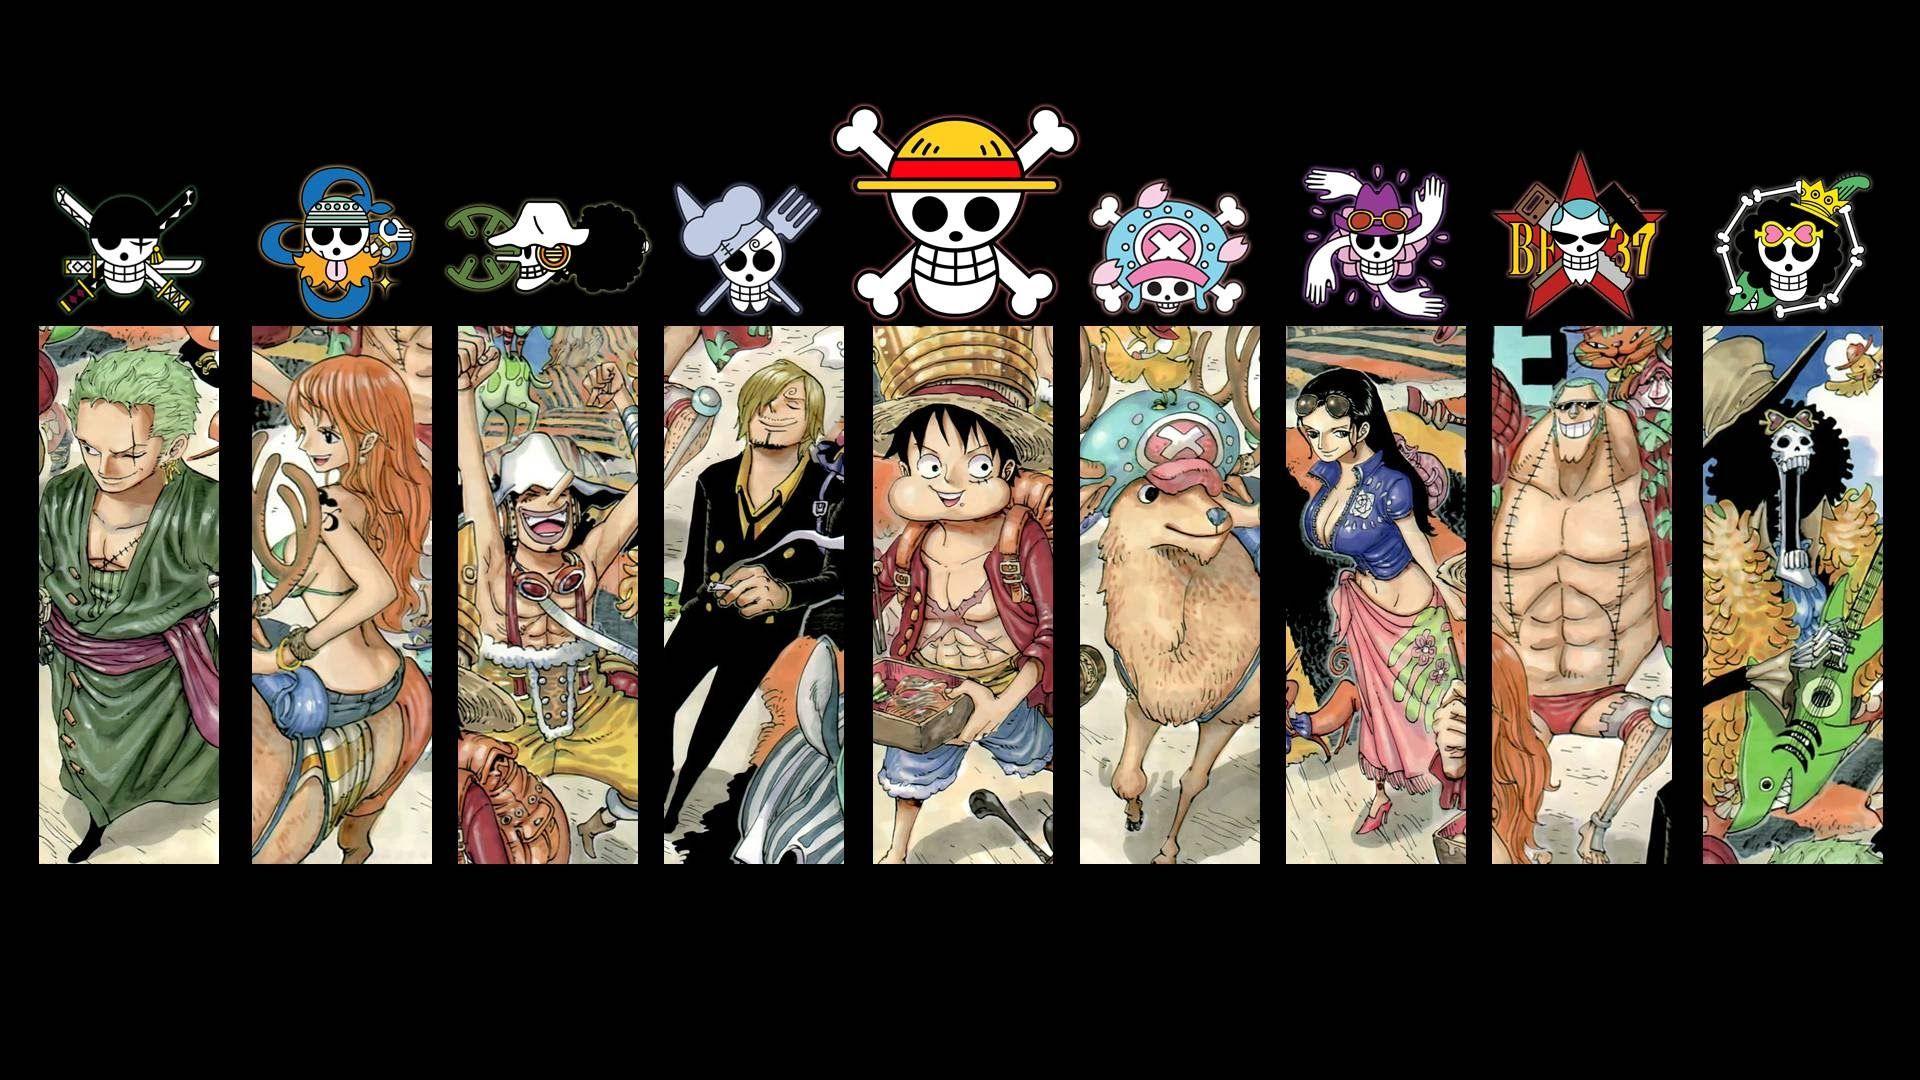 Đĩa PS4 One Piece: Pirate Warriors 4